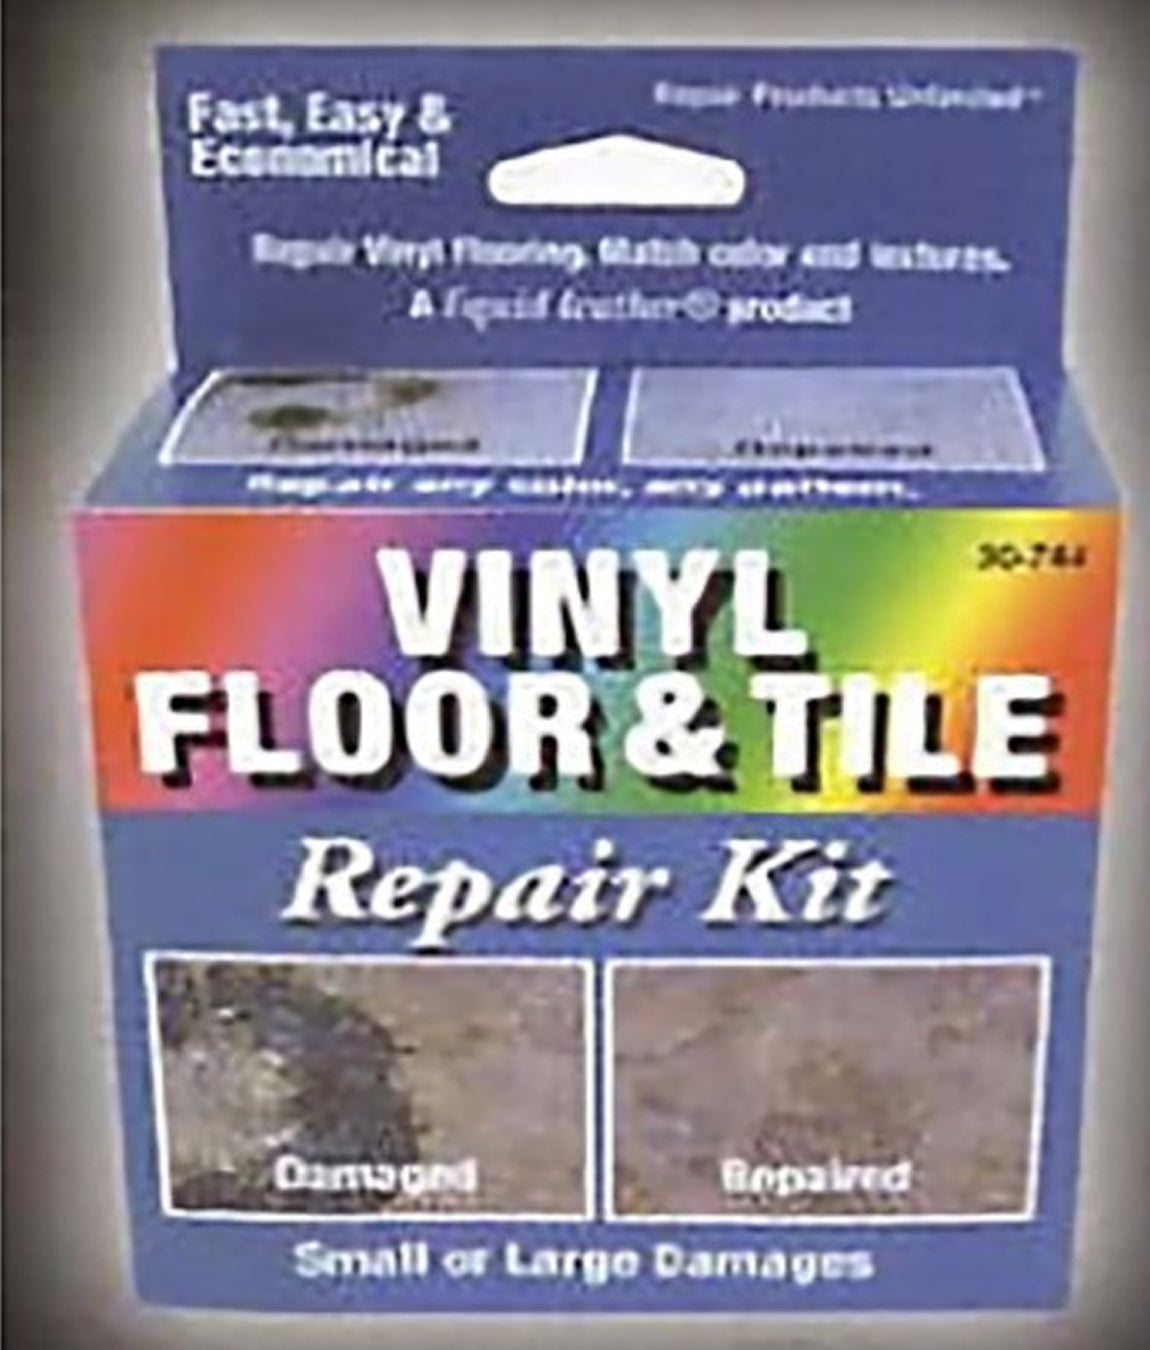 Liquid Leather Vinyl Floor and Tile Repair Kit